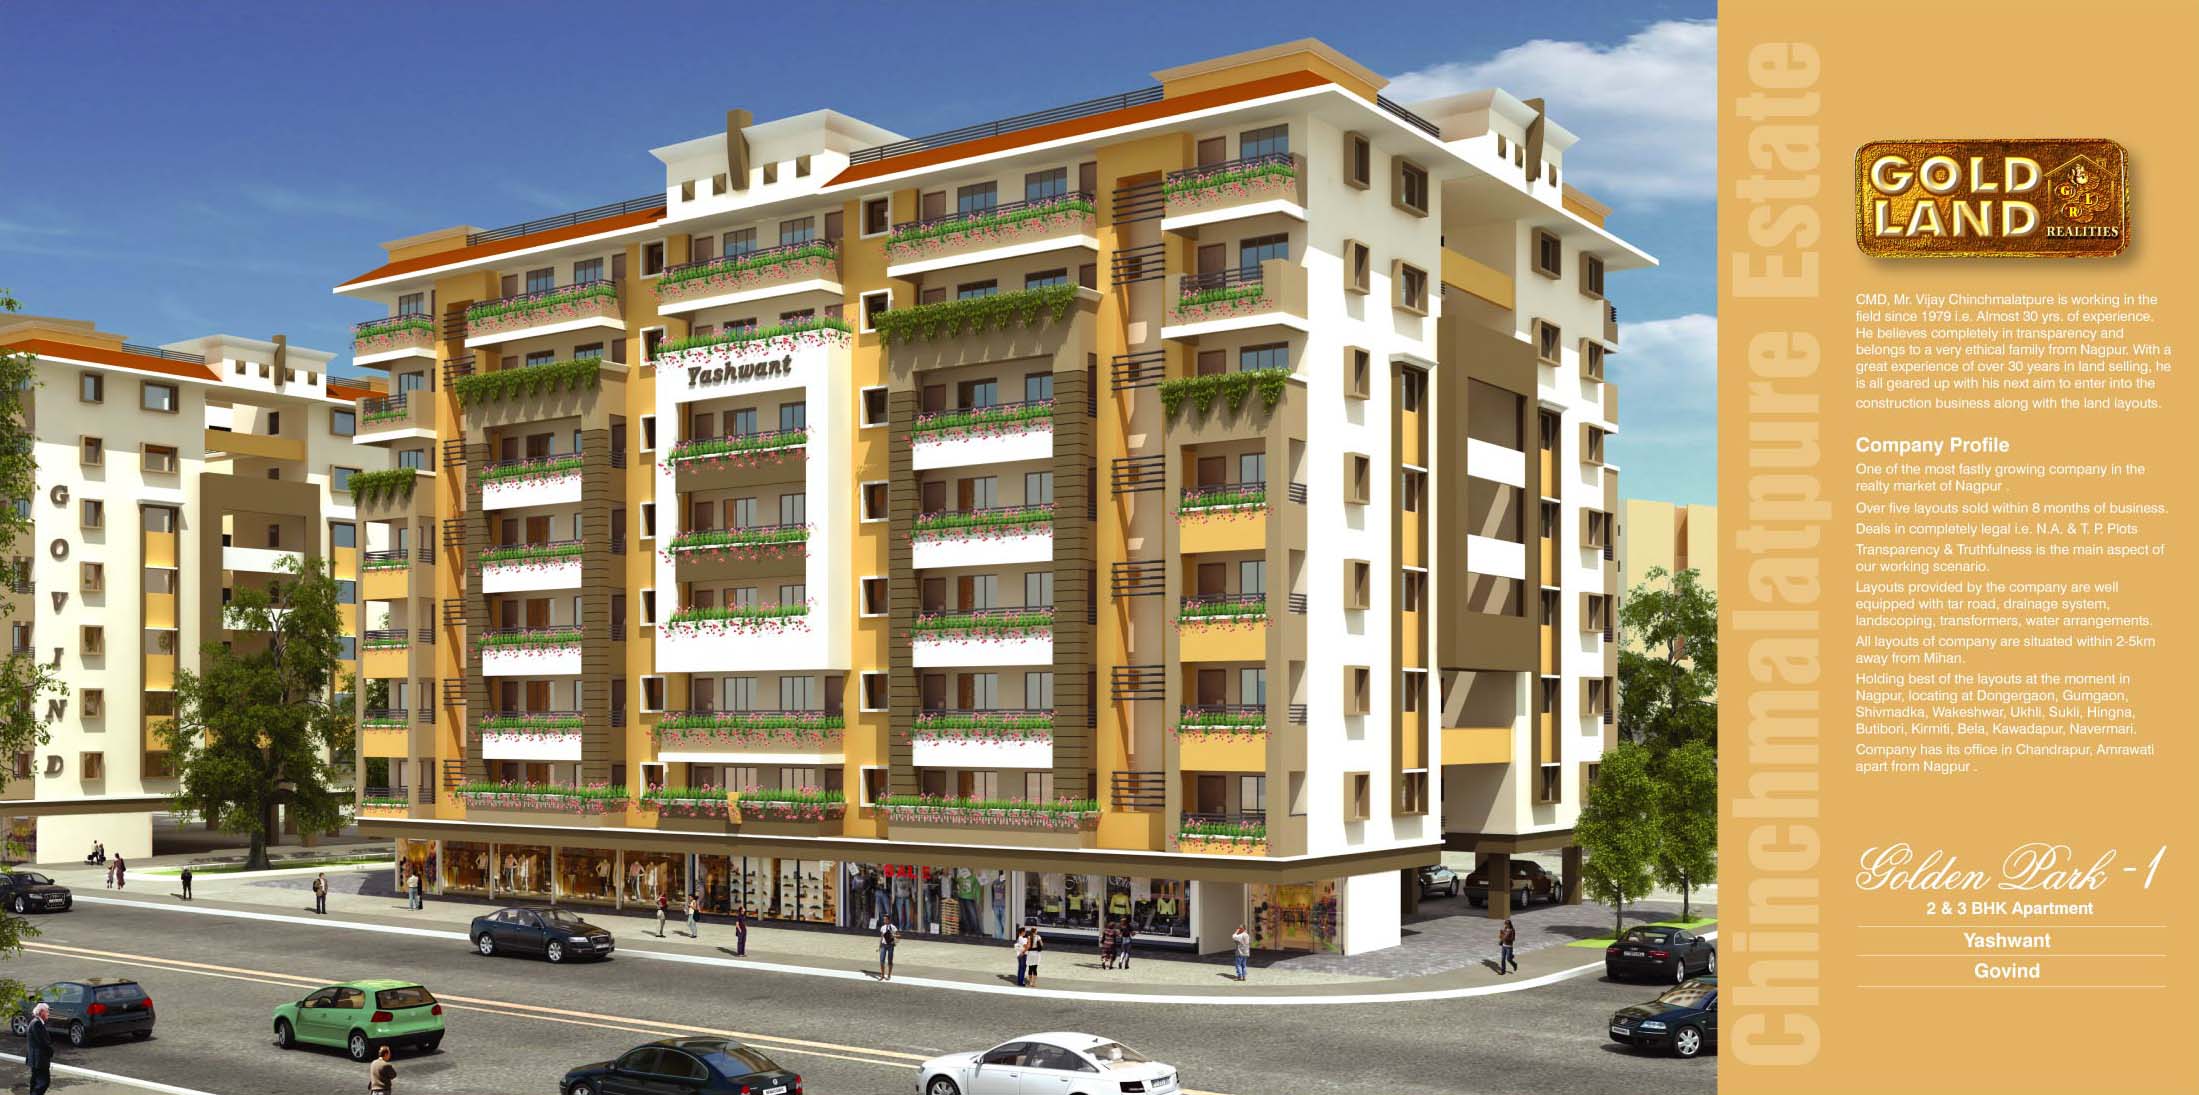 Sale Apartments / Flats manewada nagpur Flats for Sale Nagpur